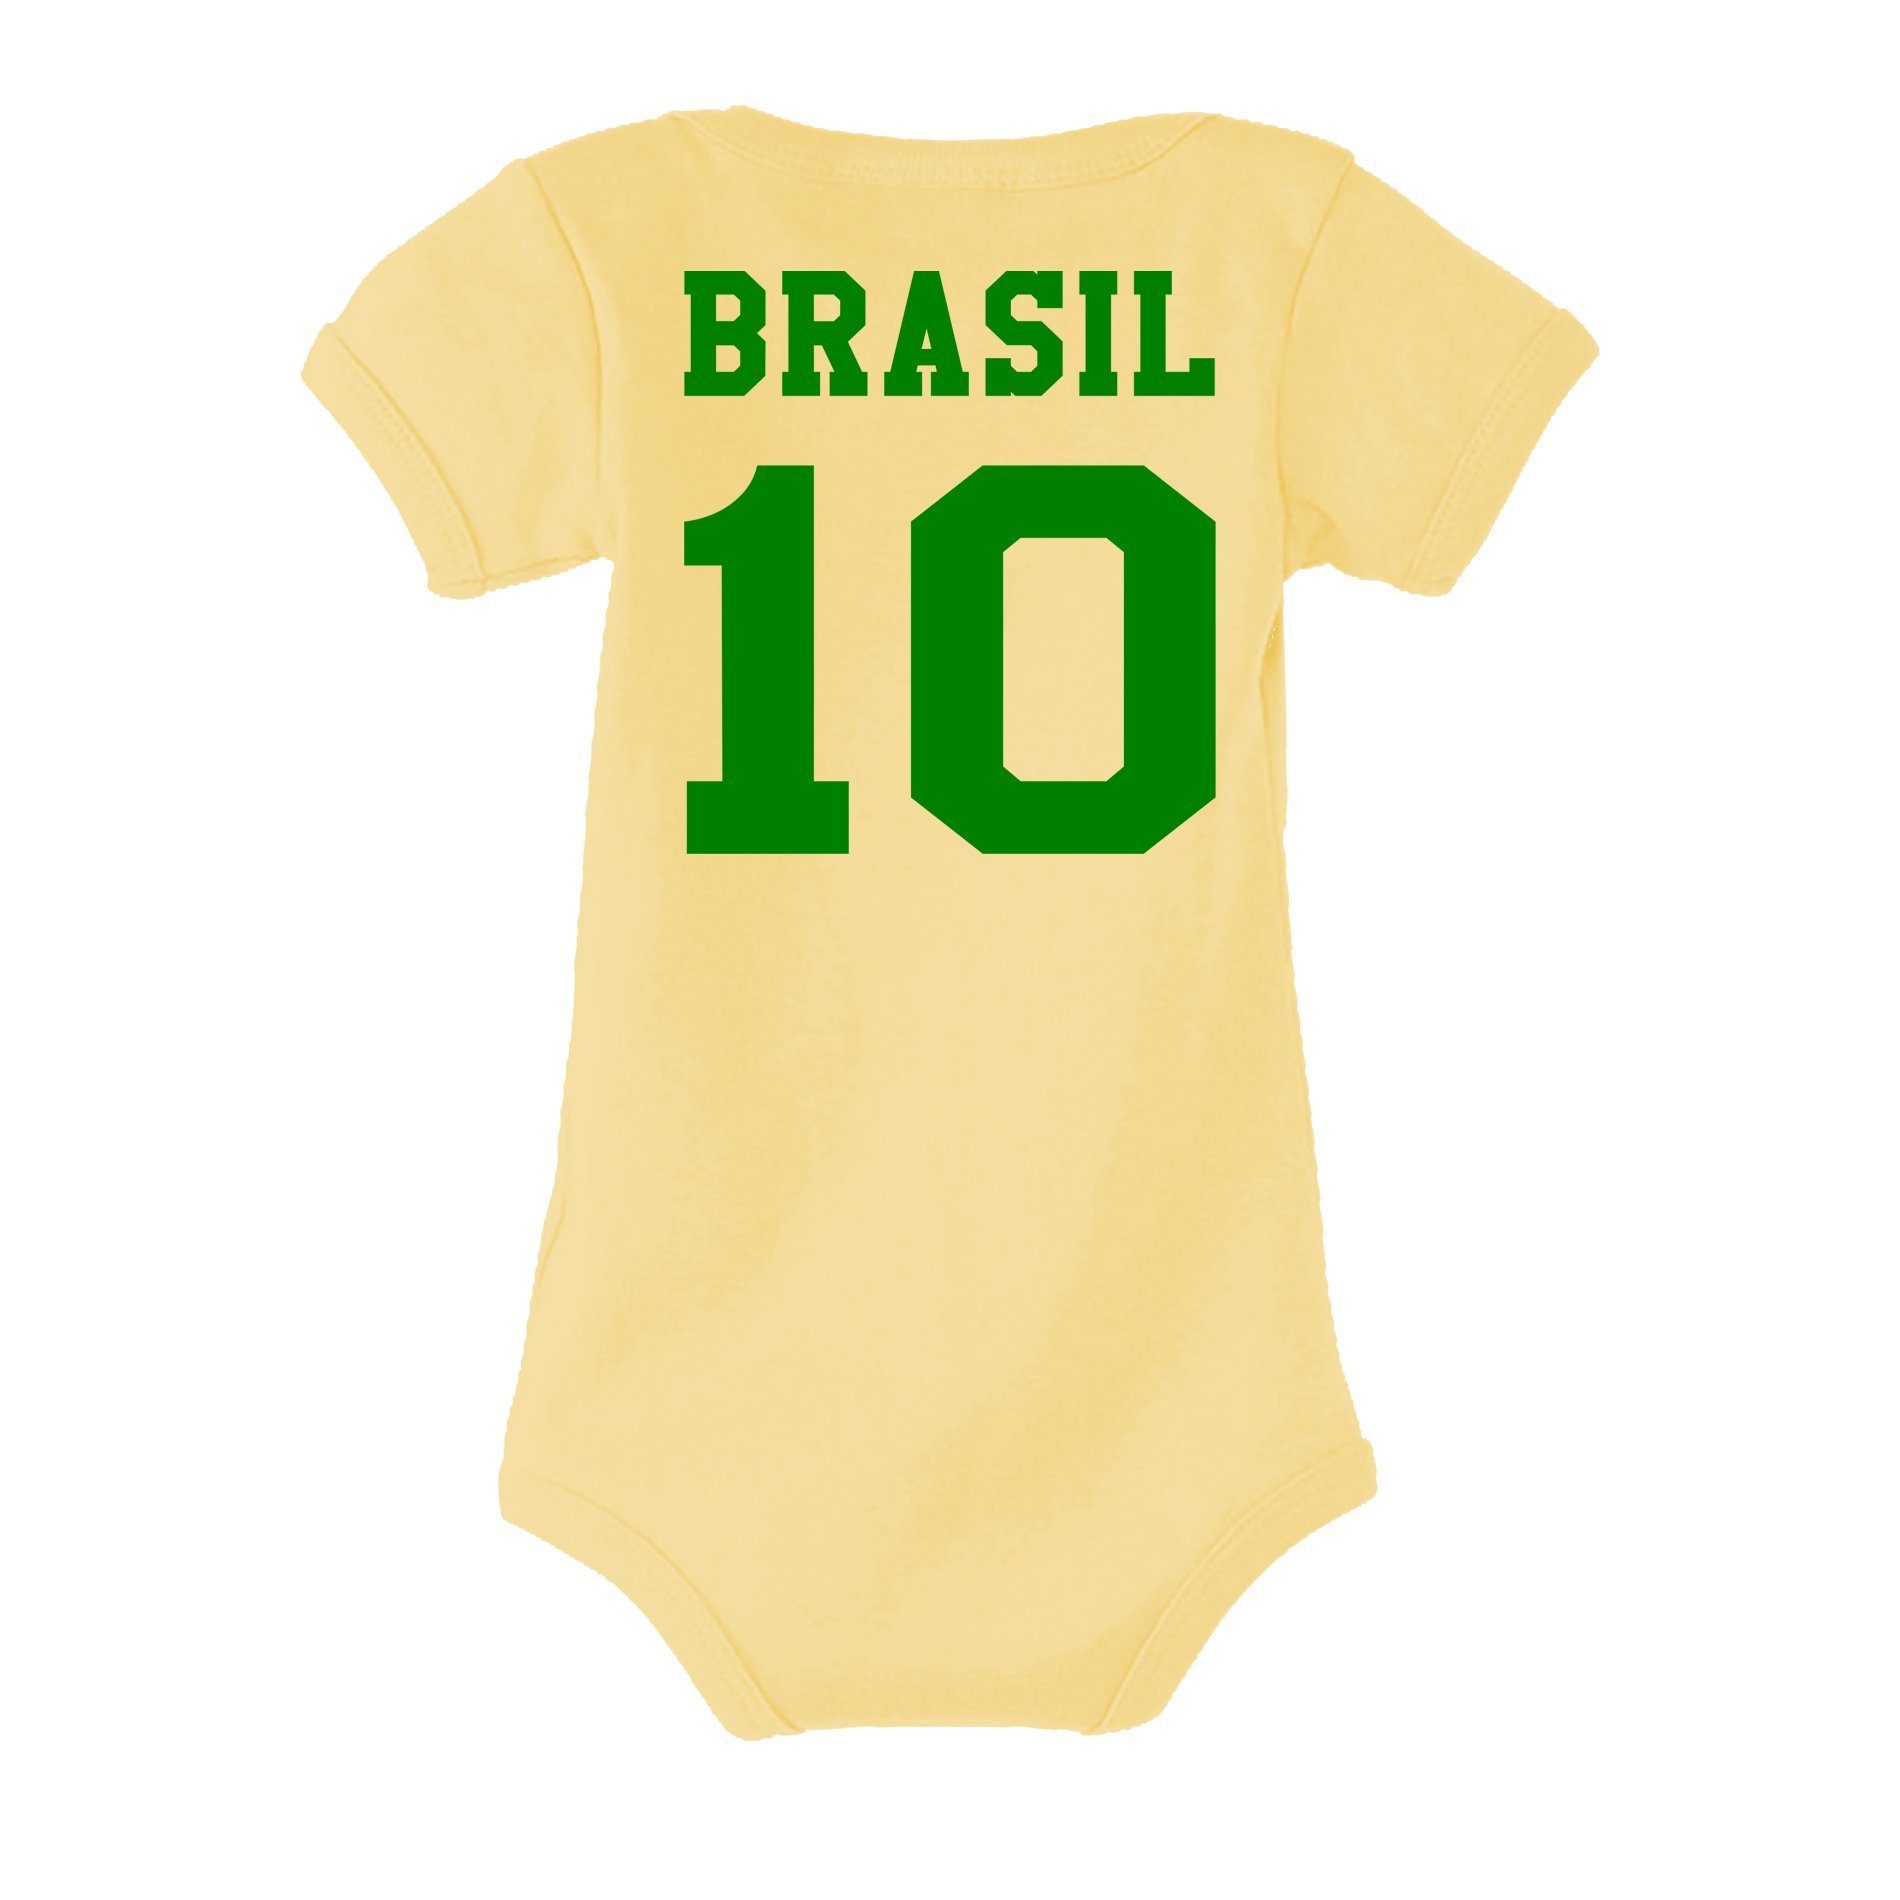 Trikot Baby Body Brownie Brasilien Blondie Strampler & Weltmeister Kinder WM Sport Copa Fussball